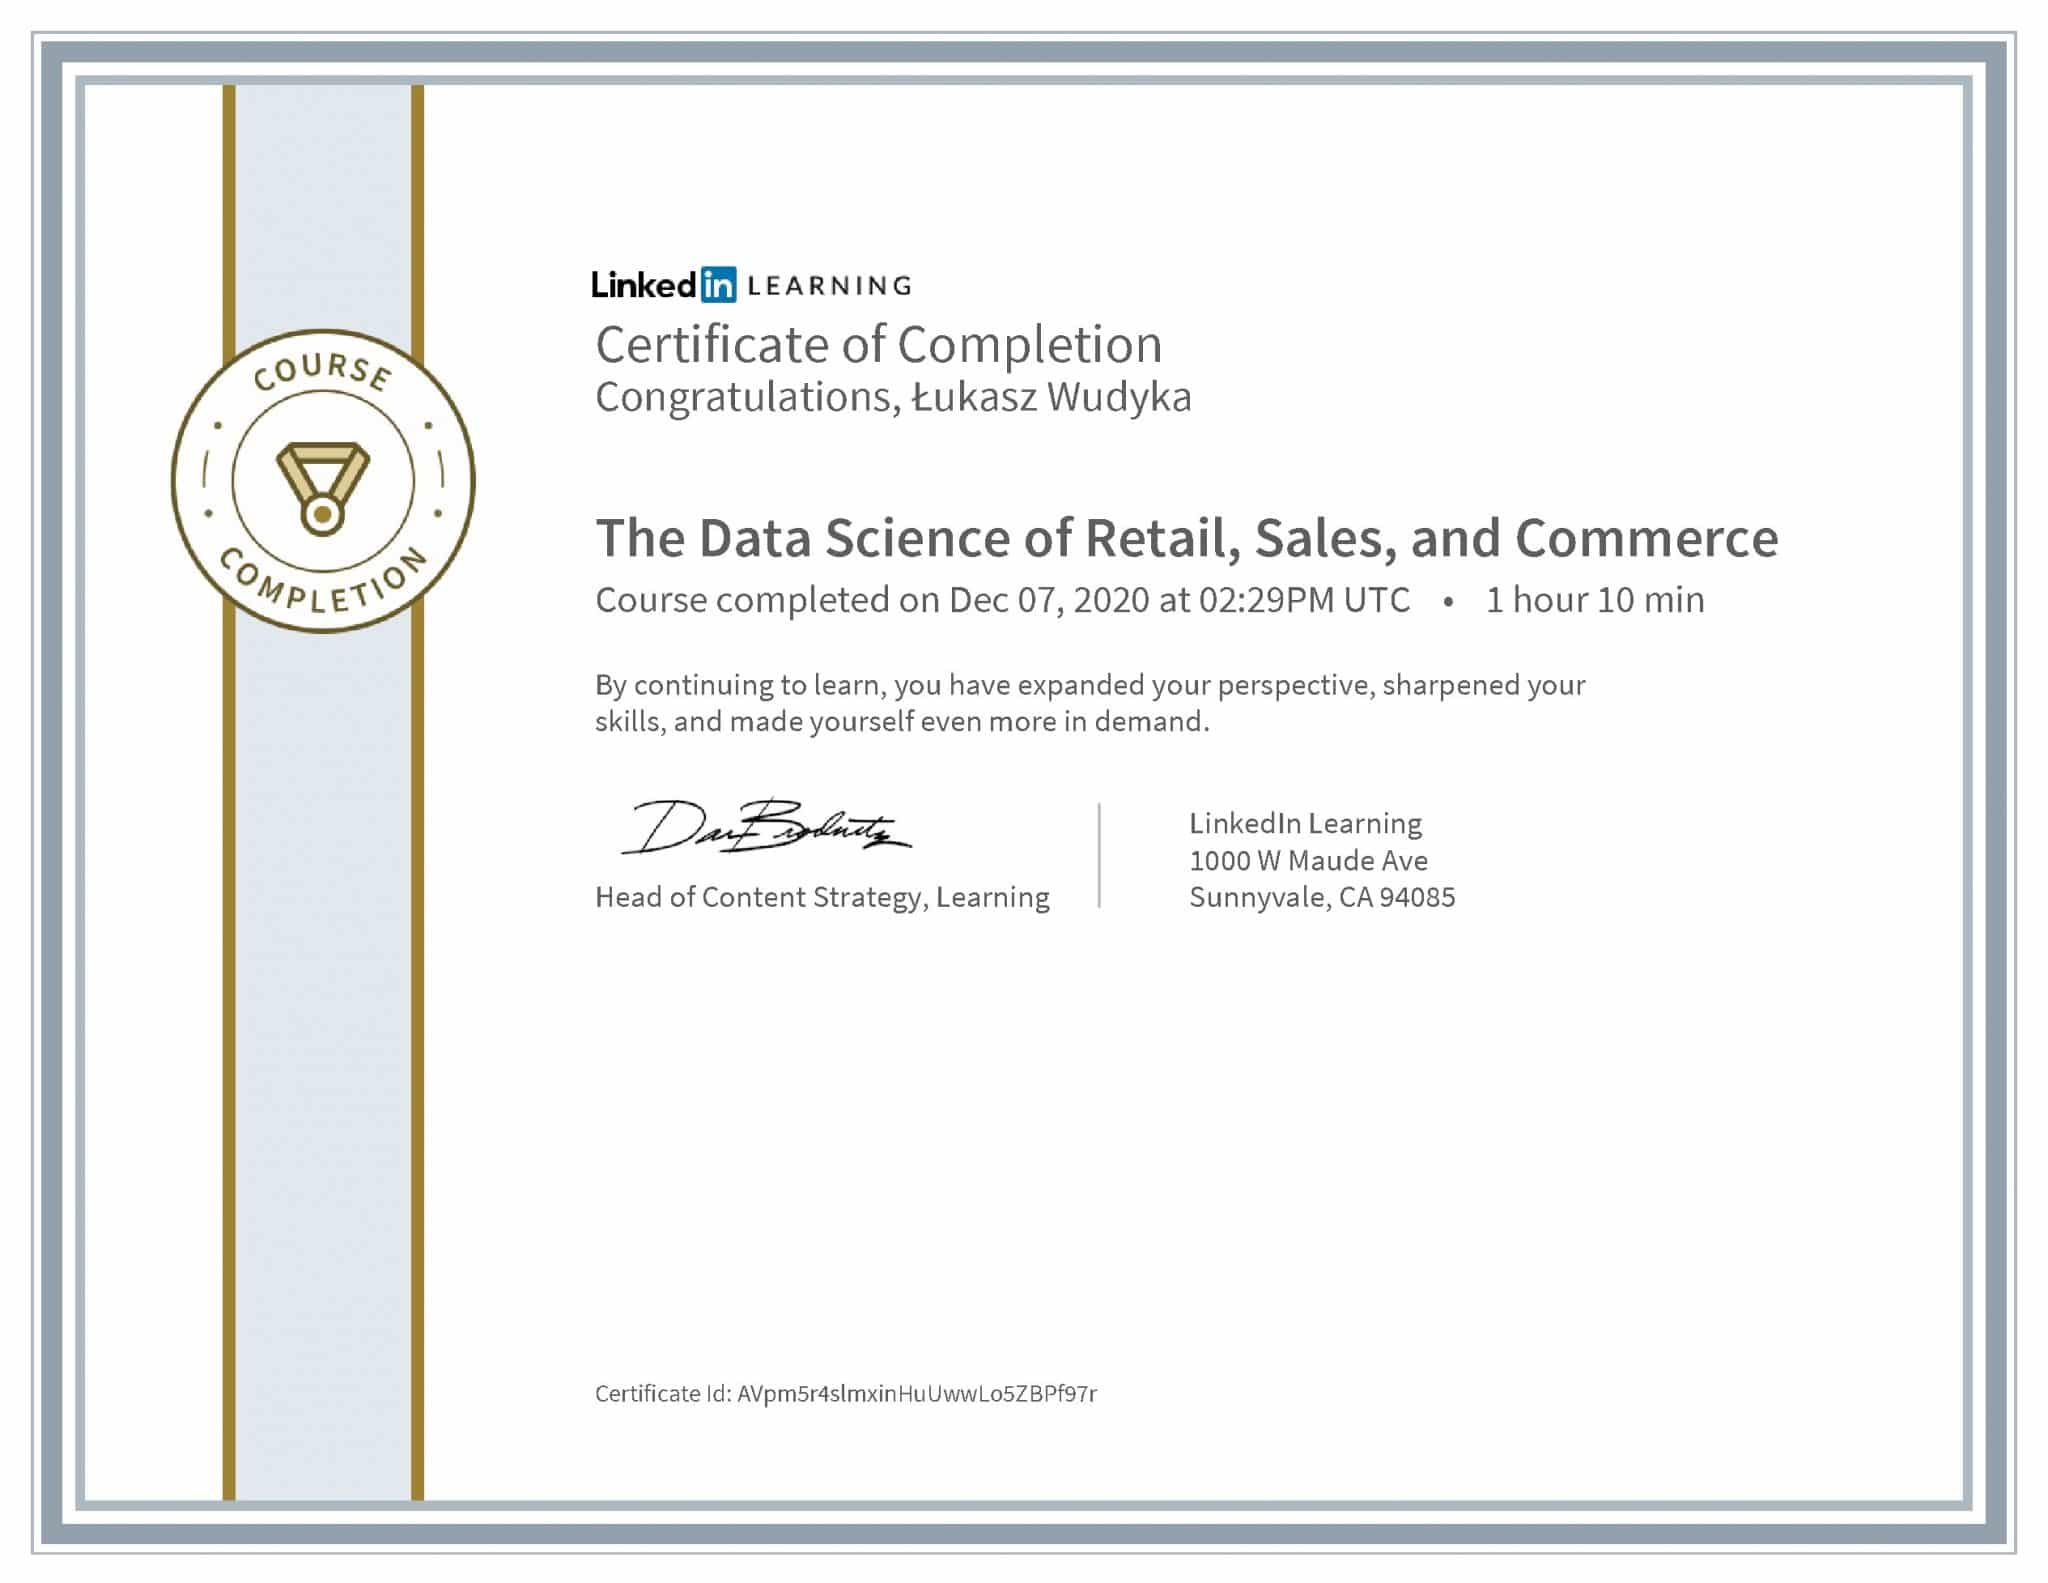 Łukasz Wudyka certyfikat LinkedIn The Data Science of Retail, Sales, and Commerce